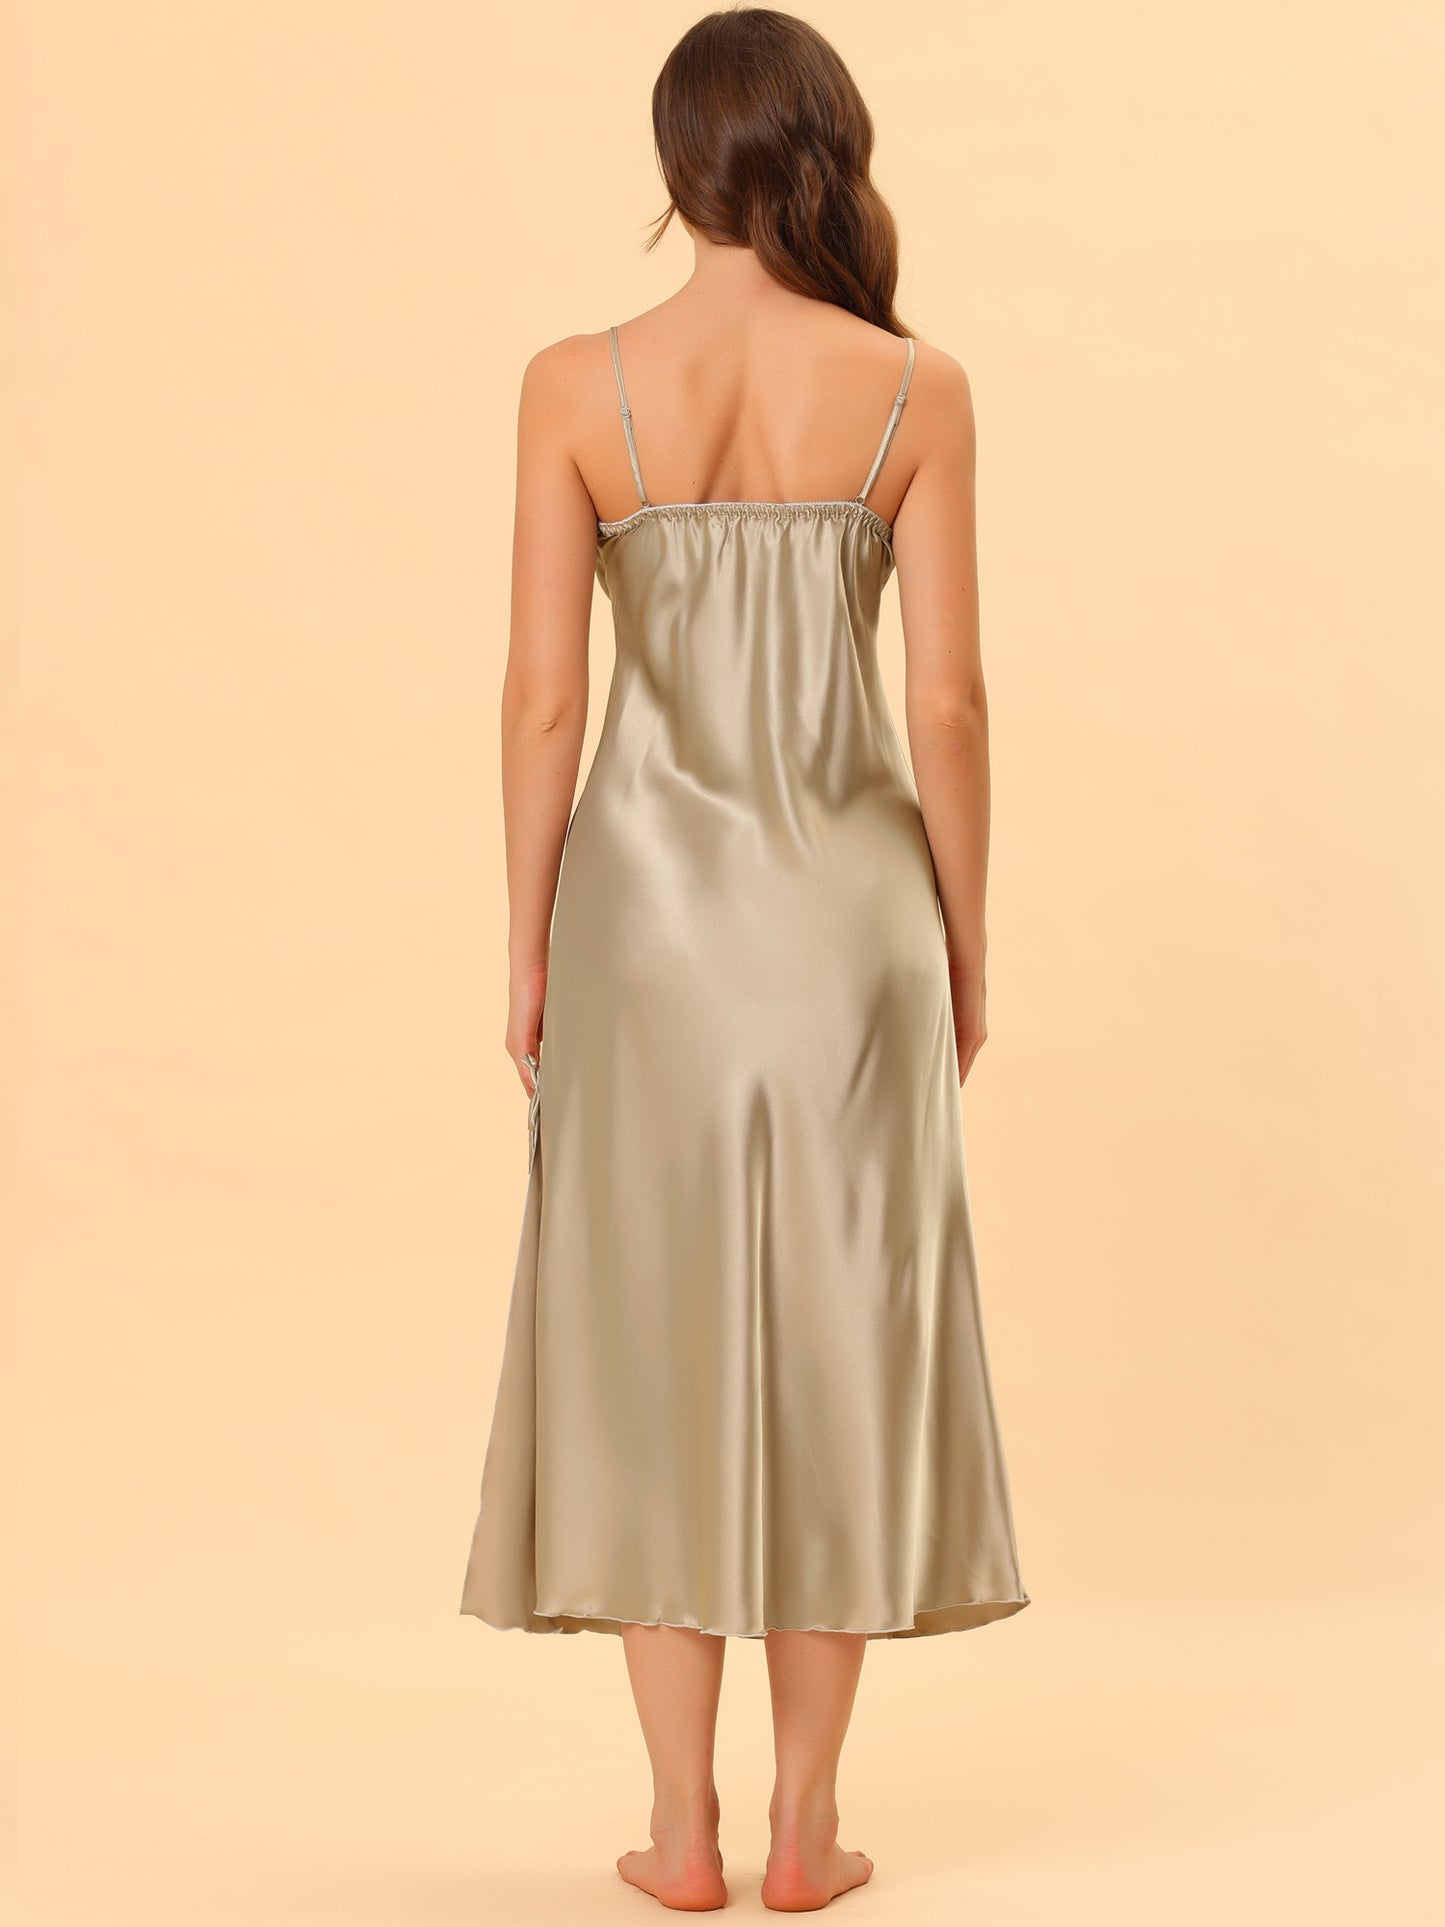 cheibear Satin Slip Dress Chemise Silky Lounge Camisole Maxi Nightgowns Light Khaki